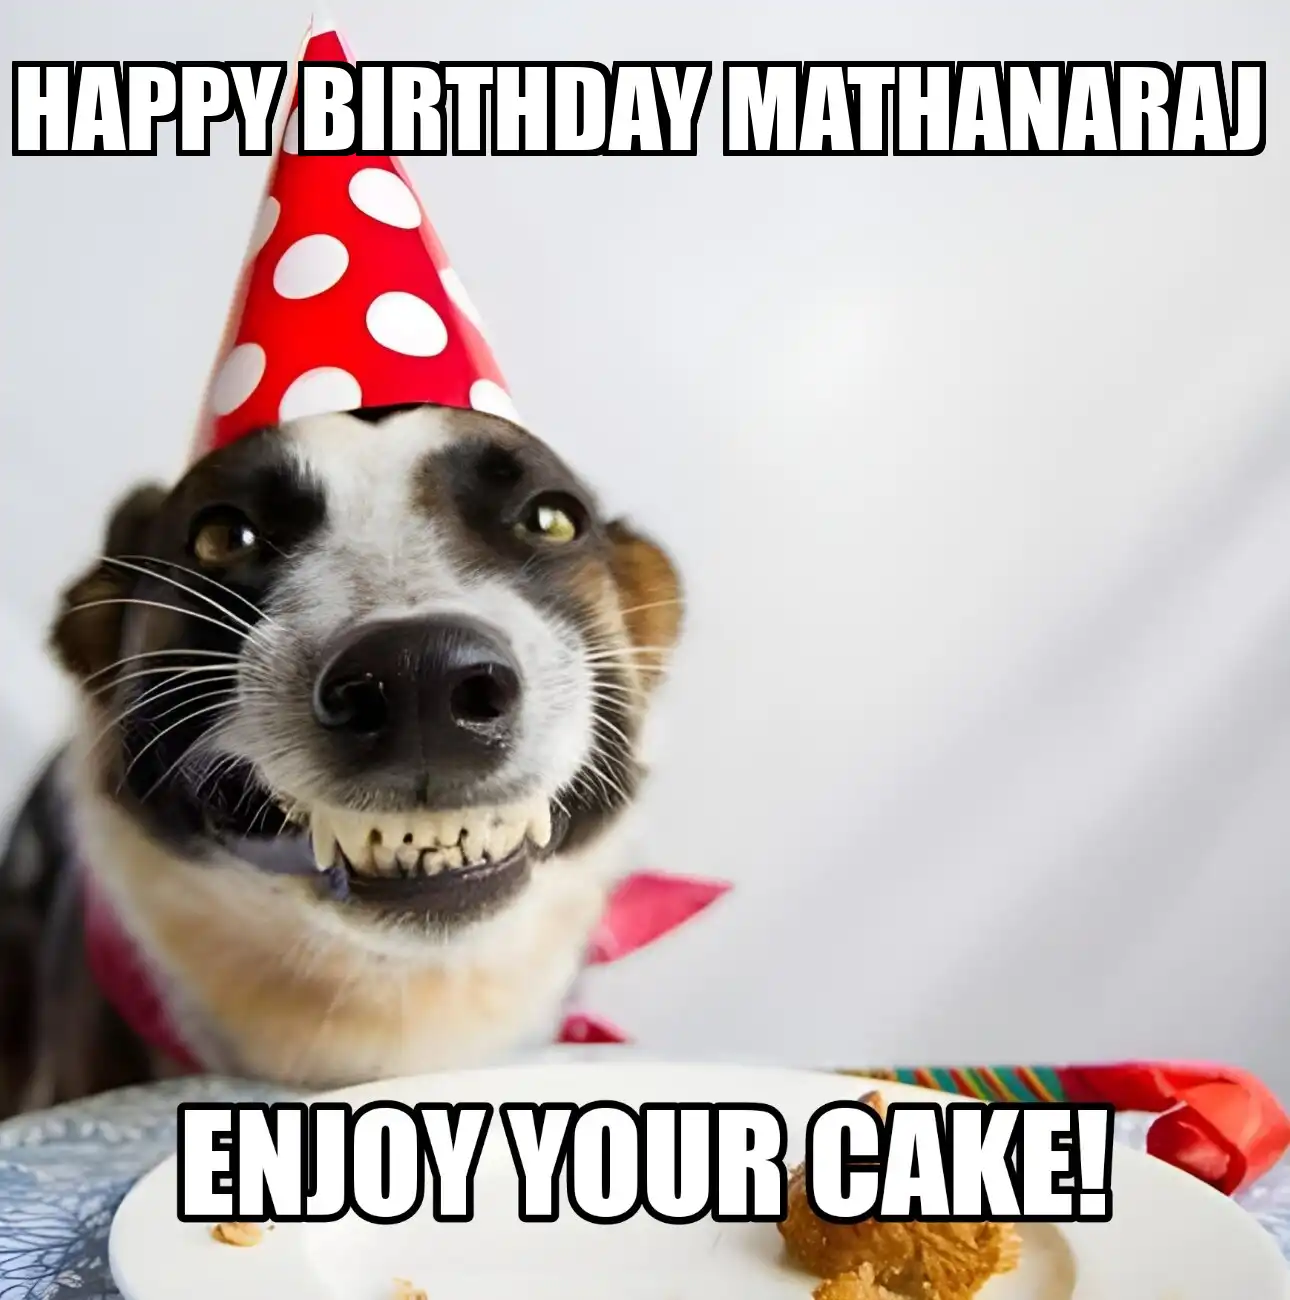 Happy Birthday Mathanaraj Enjoy Your Cake Dog Meme